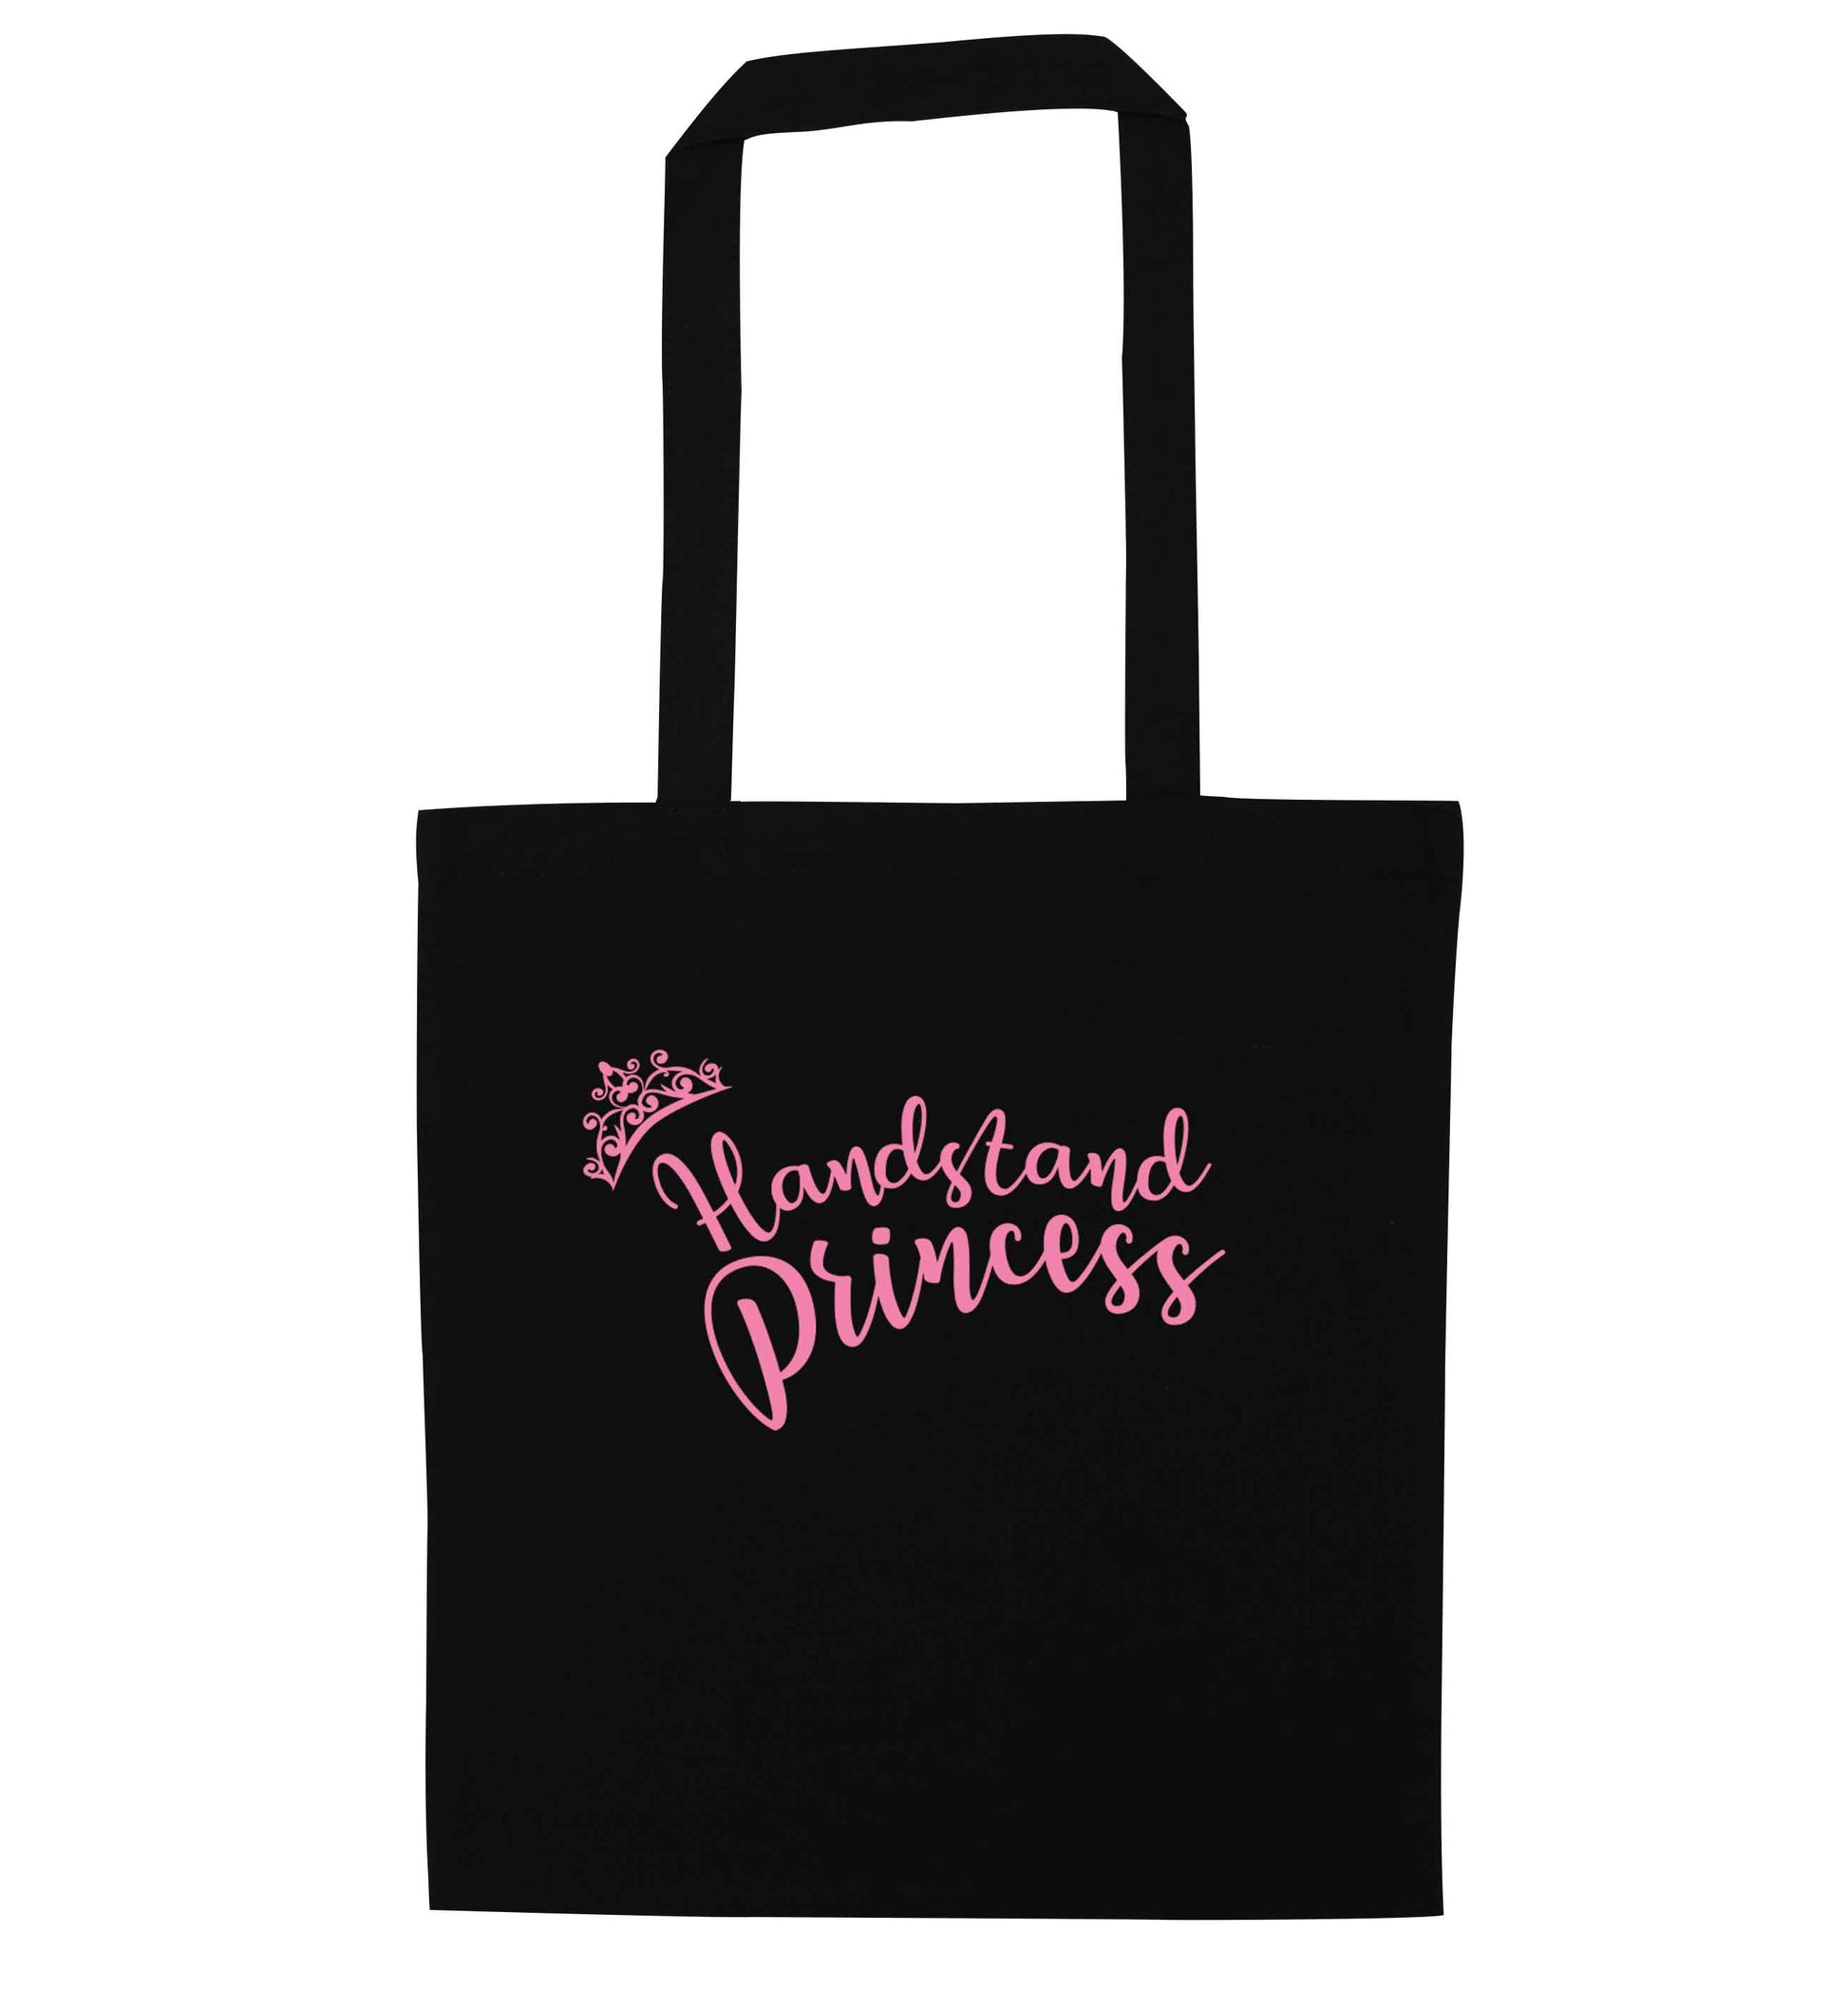 Handstand princess black tote bag